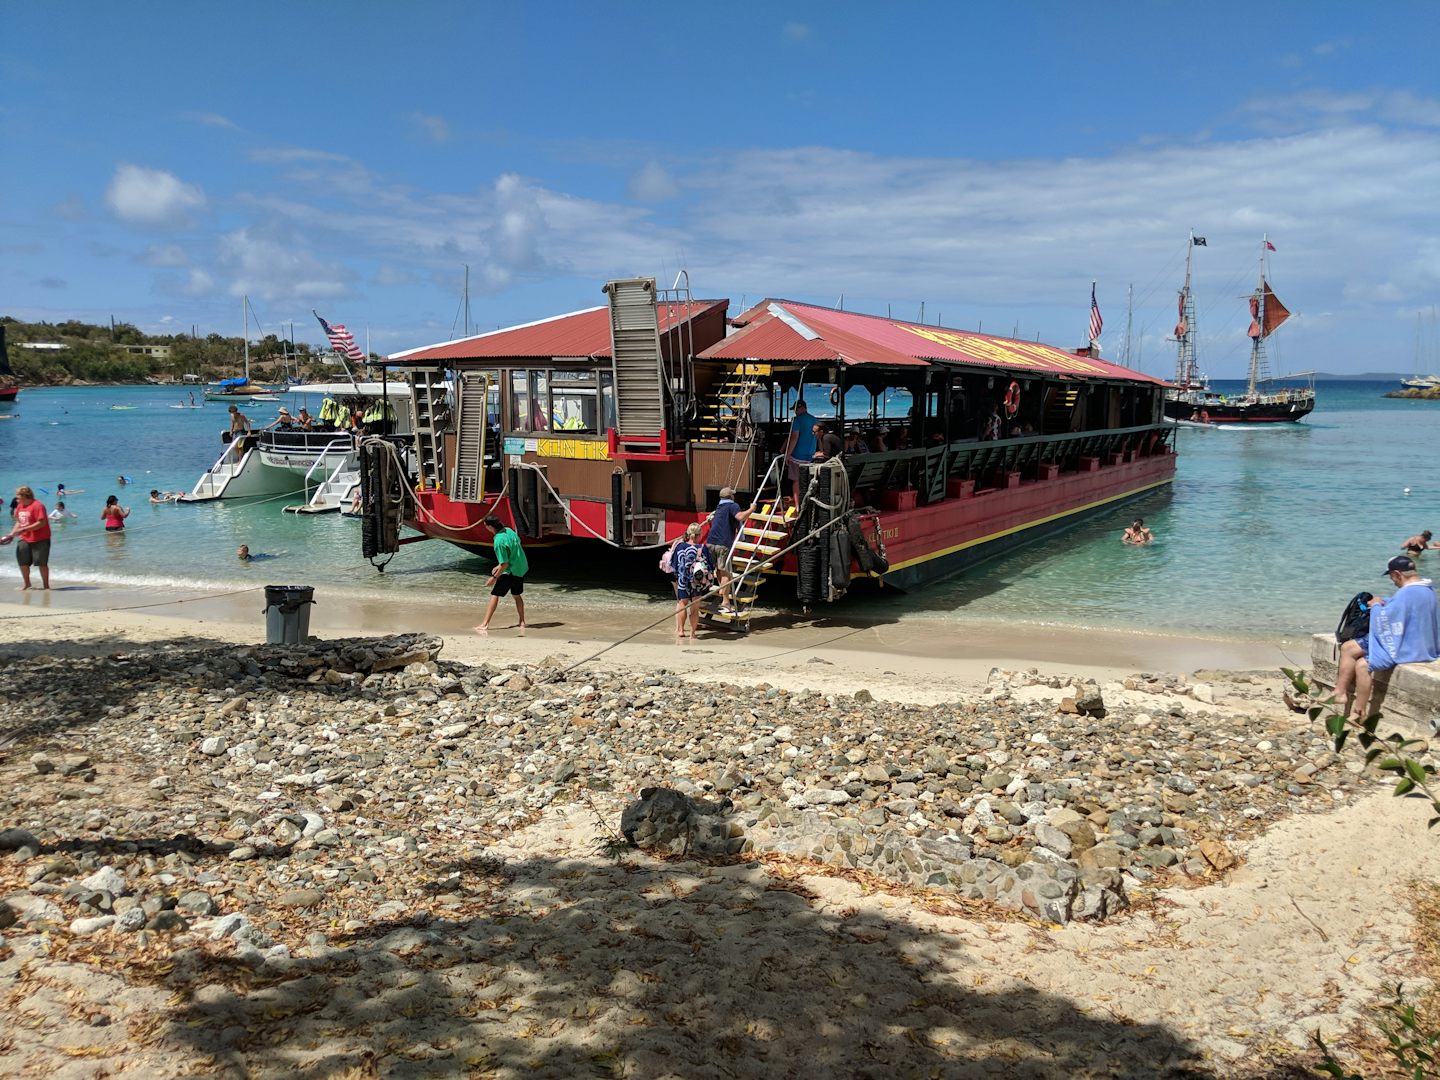 Kon Tiki boat at public beach in St. Thomas